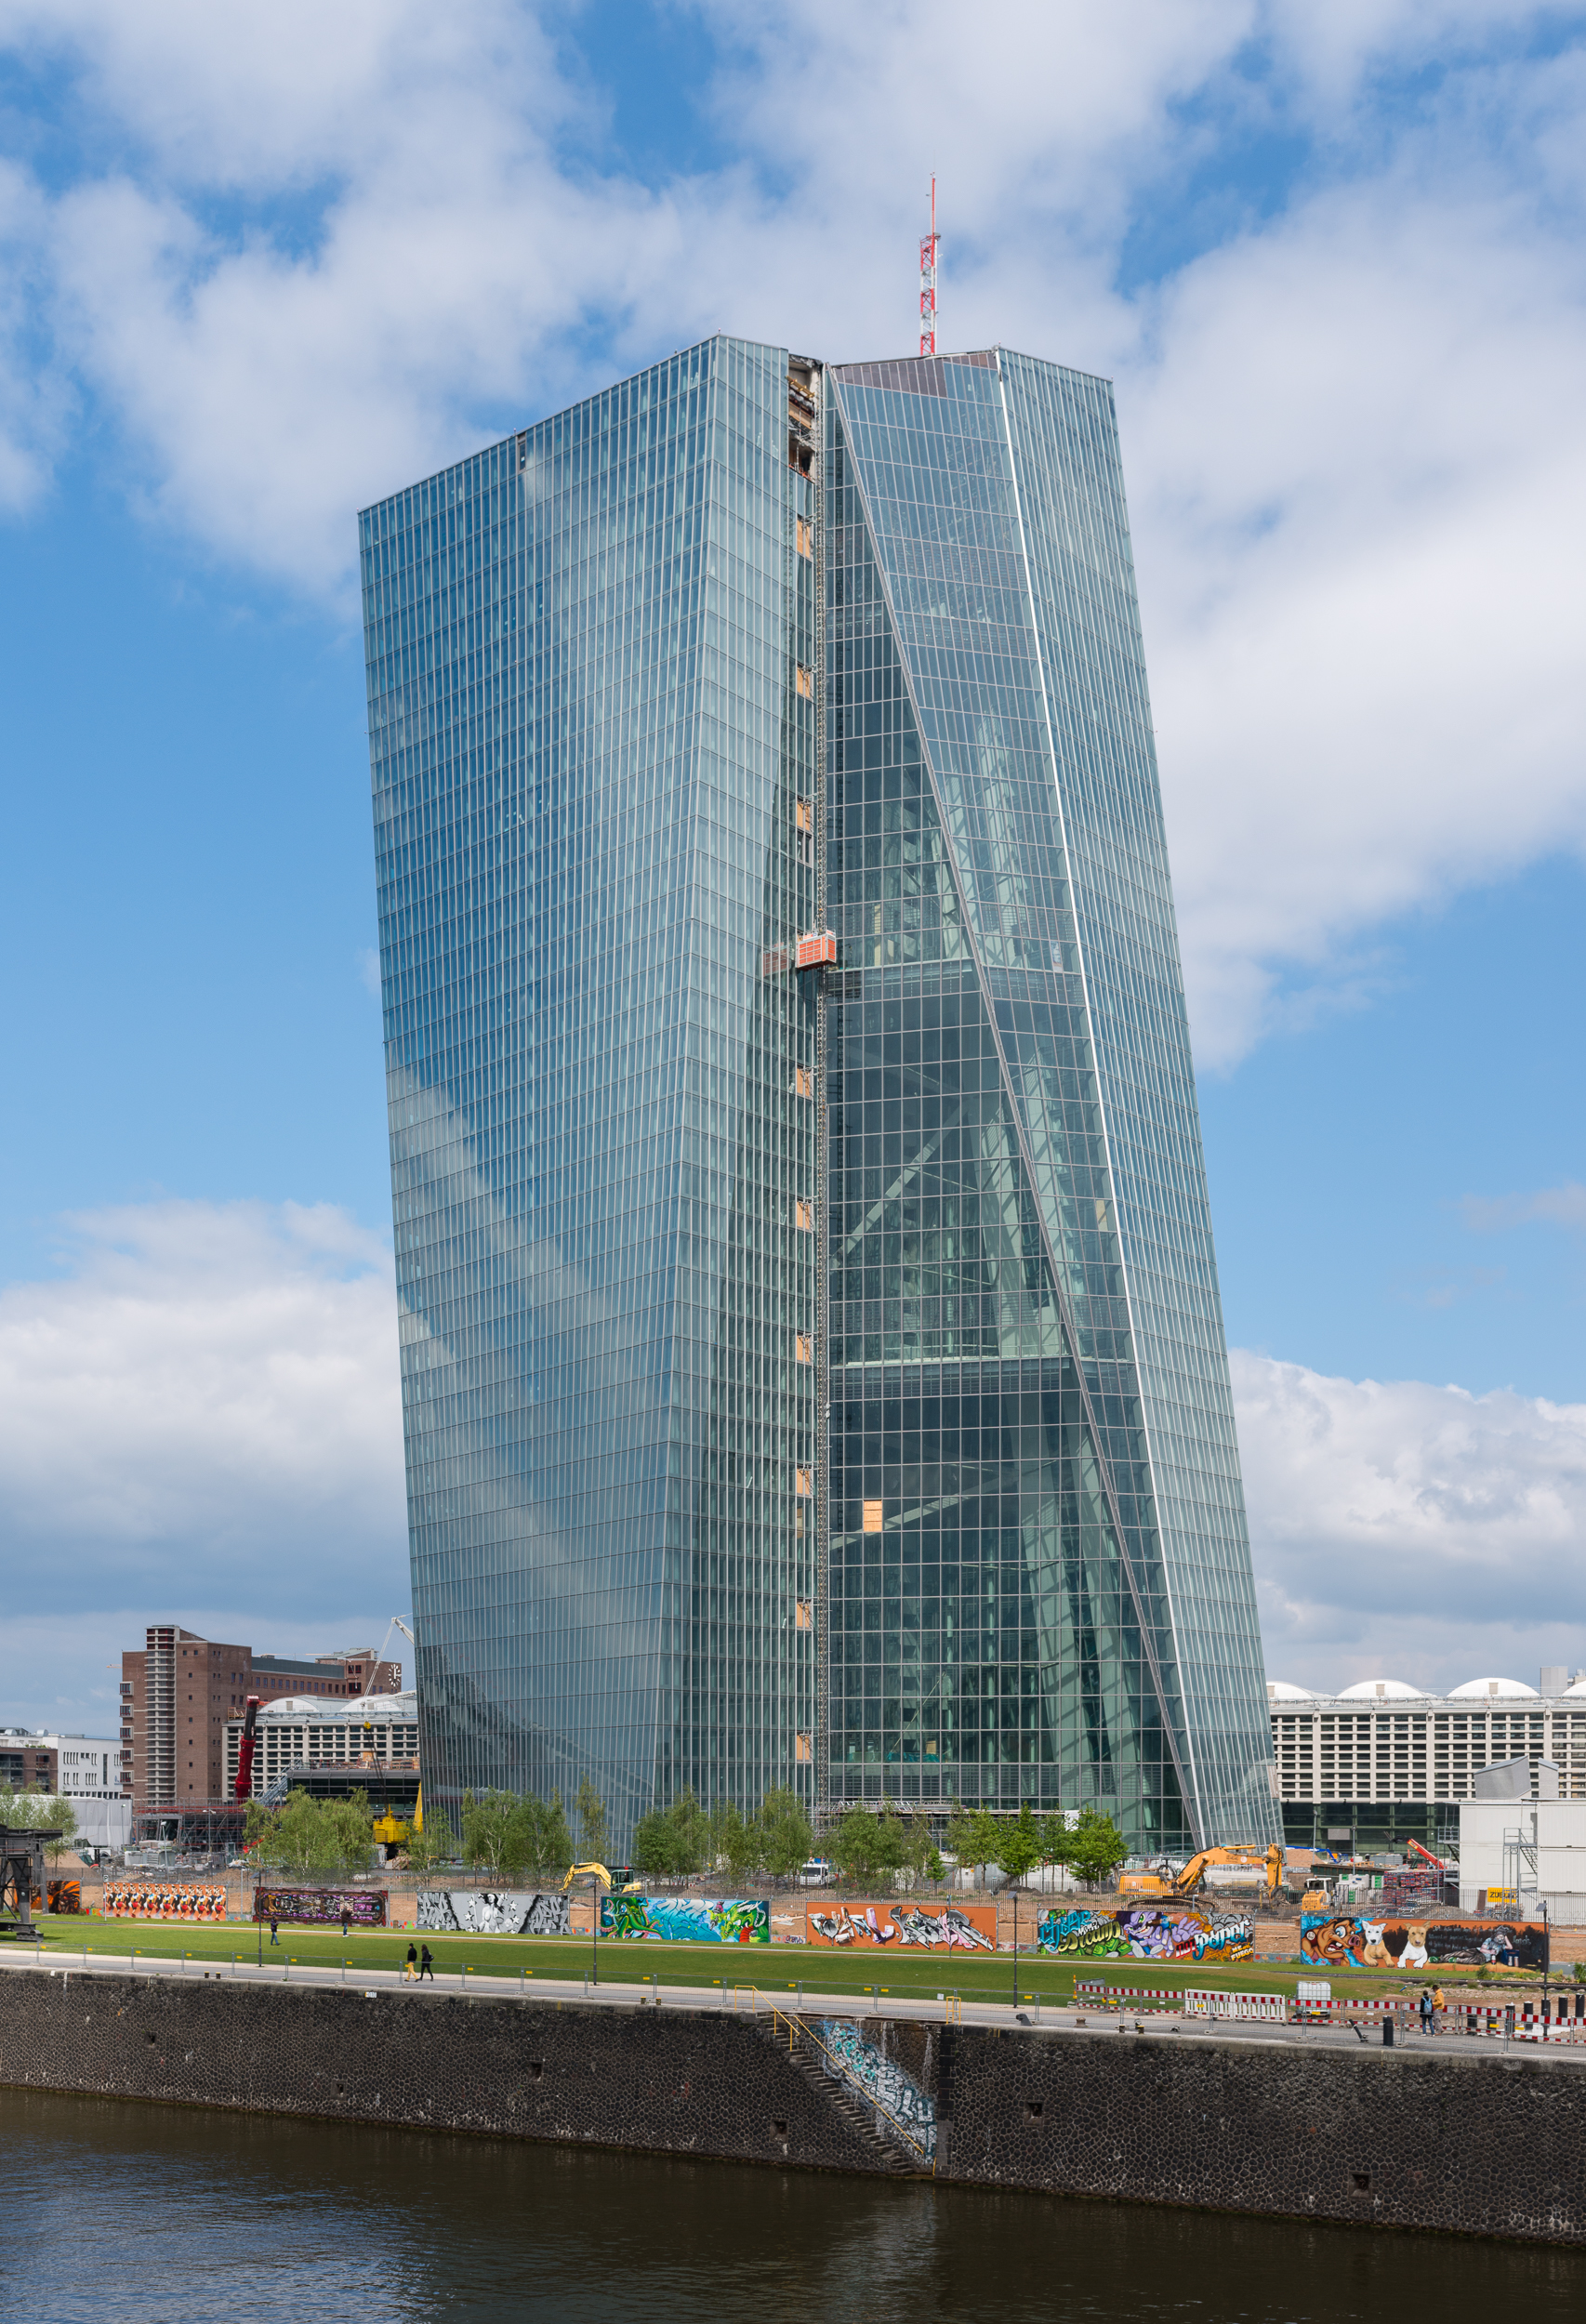 European Central Bank - building under construction - Frankfurt - Germany - 12